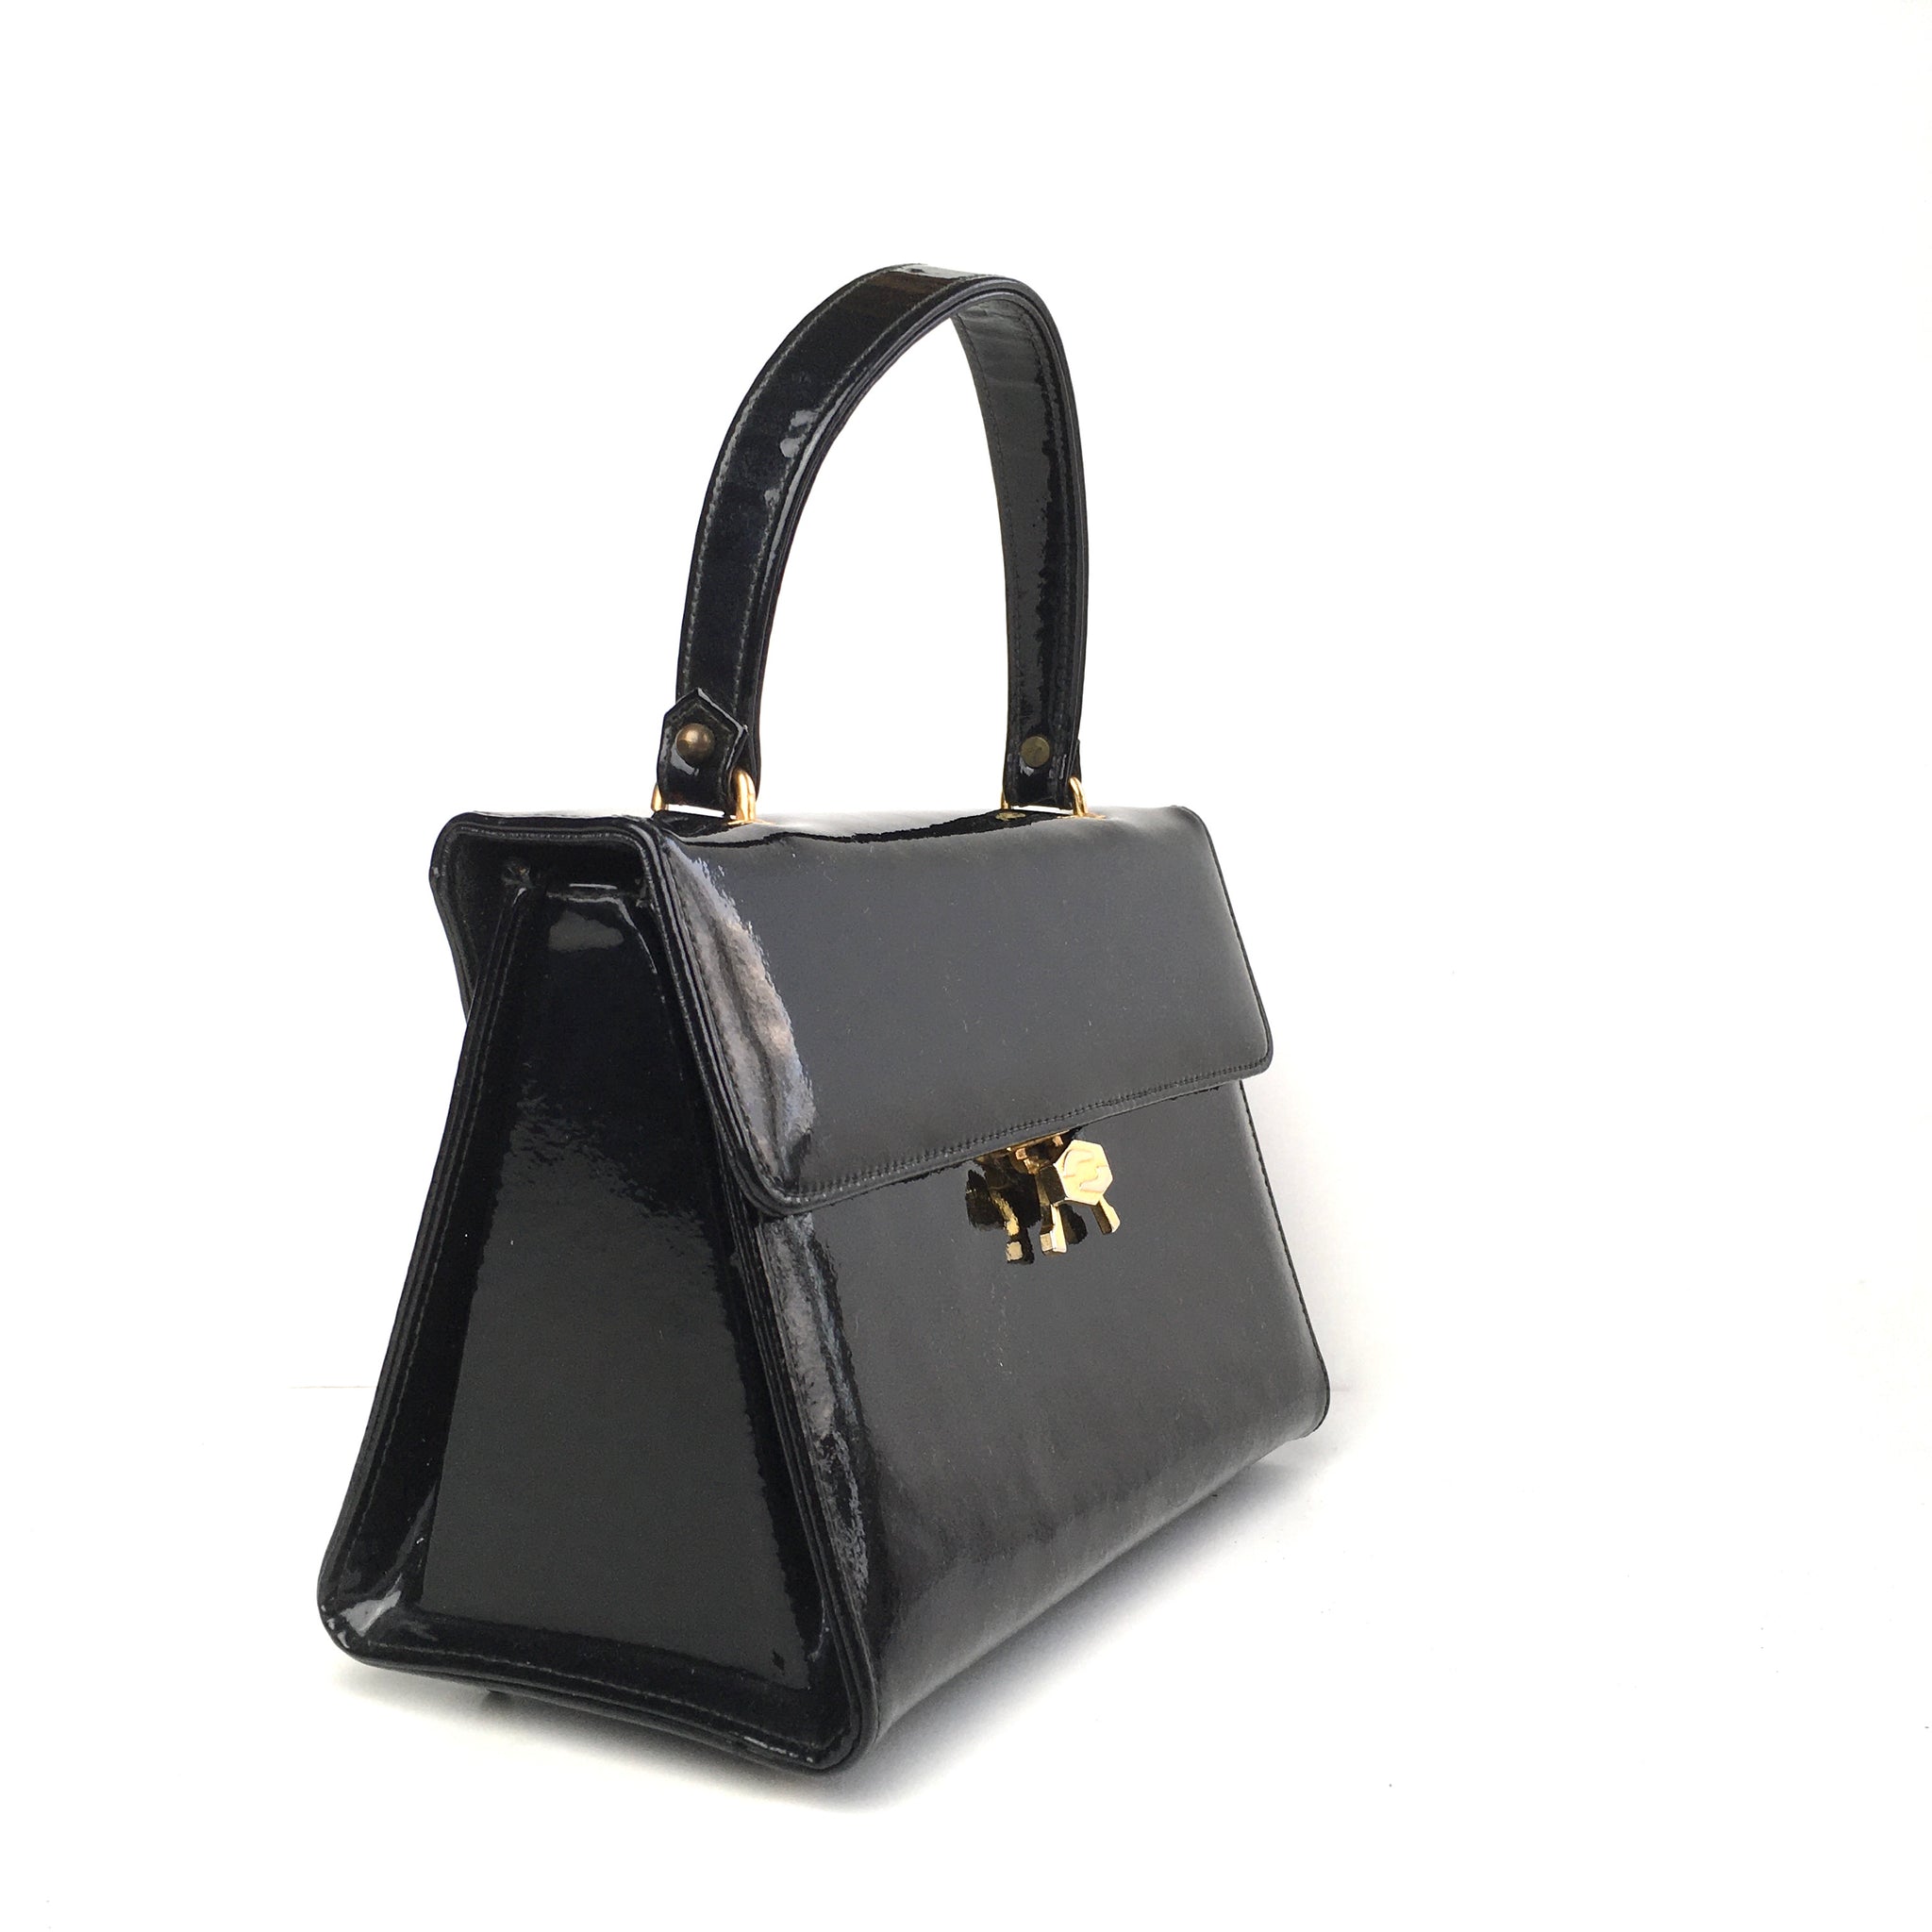 Sealskin handbag - Lexie | BILODEAU Canada